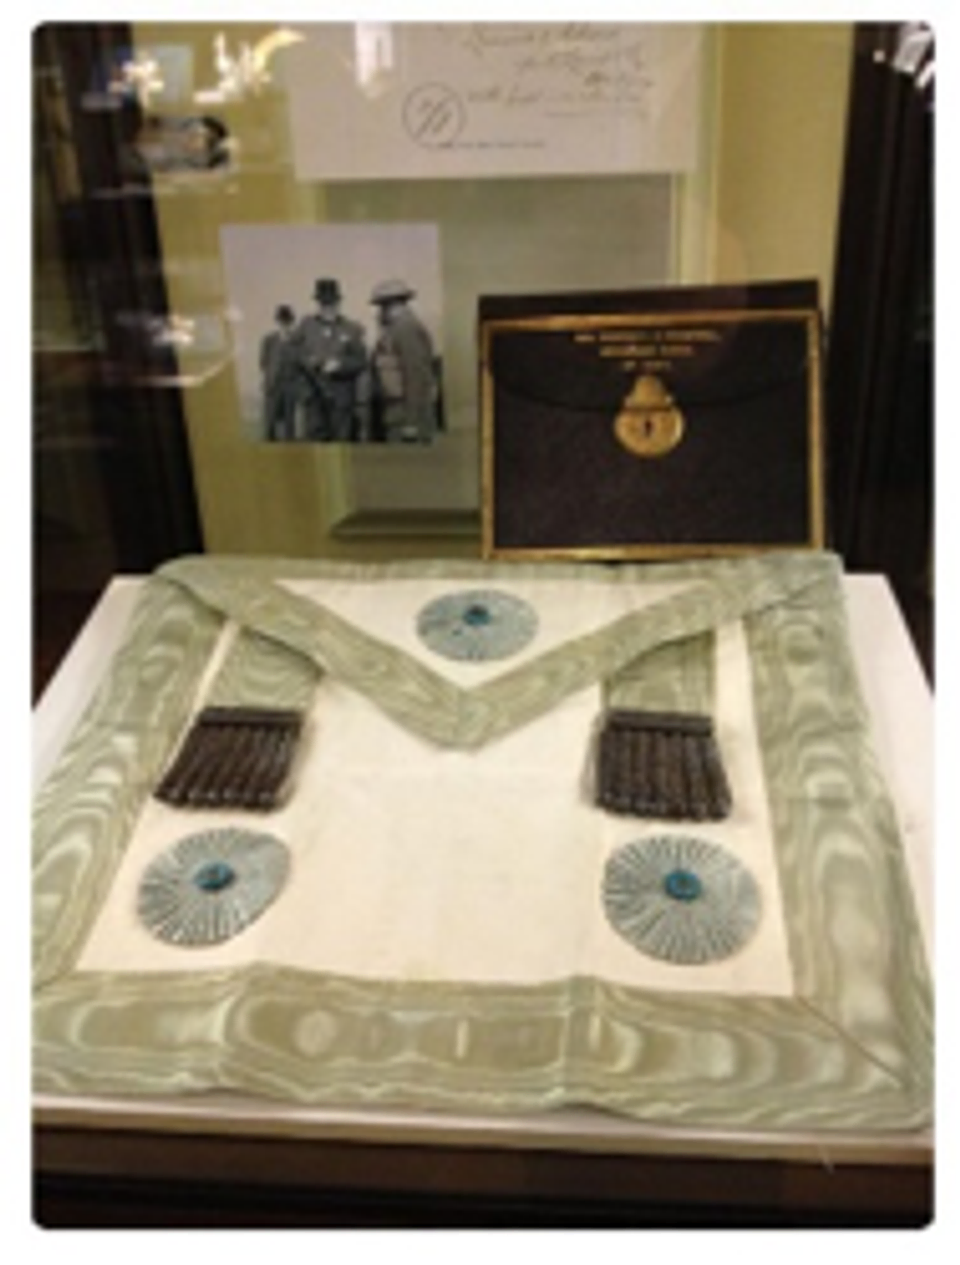 Winston Churchill’s Masonic apron on display at a museum